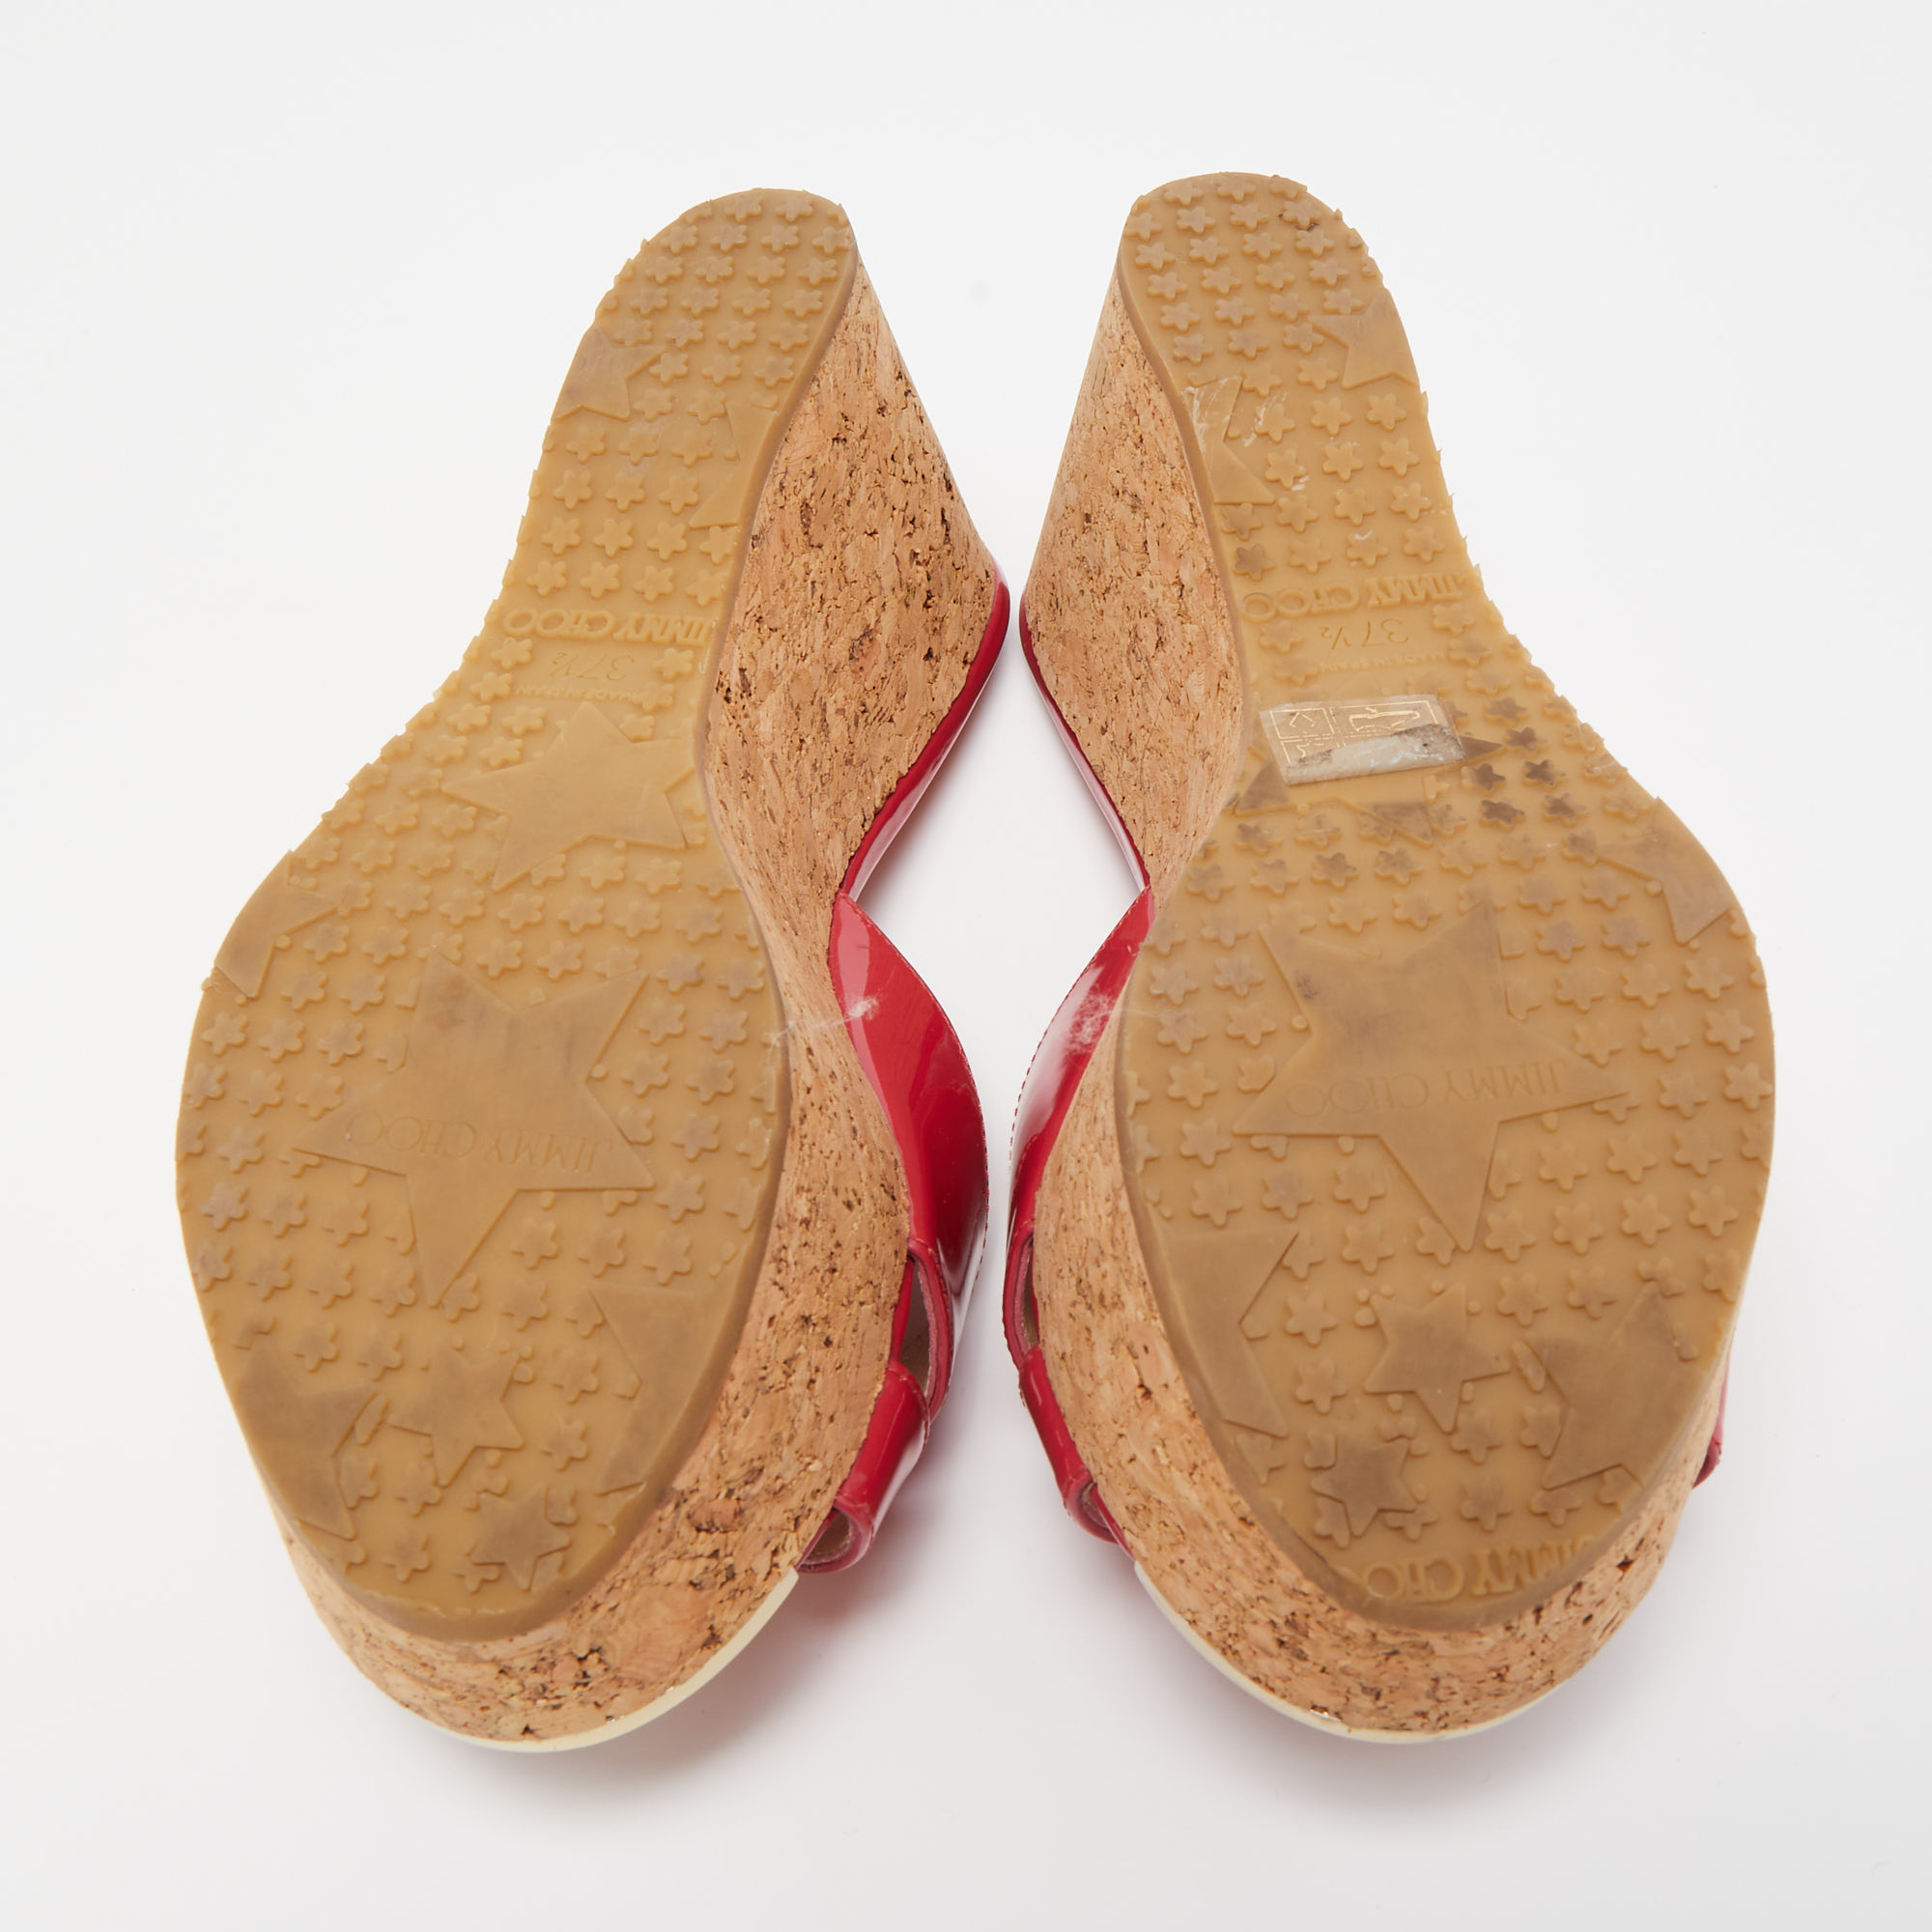 Jimmy Choo Pink Patent Leather Prima Cork Wedge Platform Sandals Size 37.5